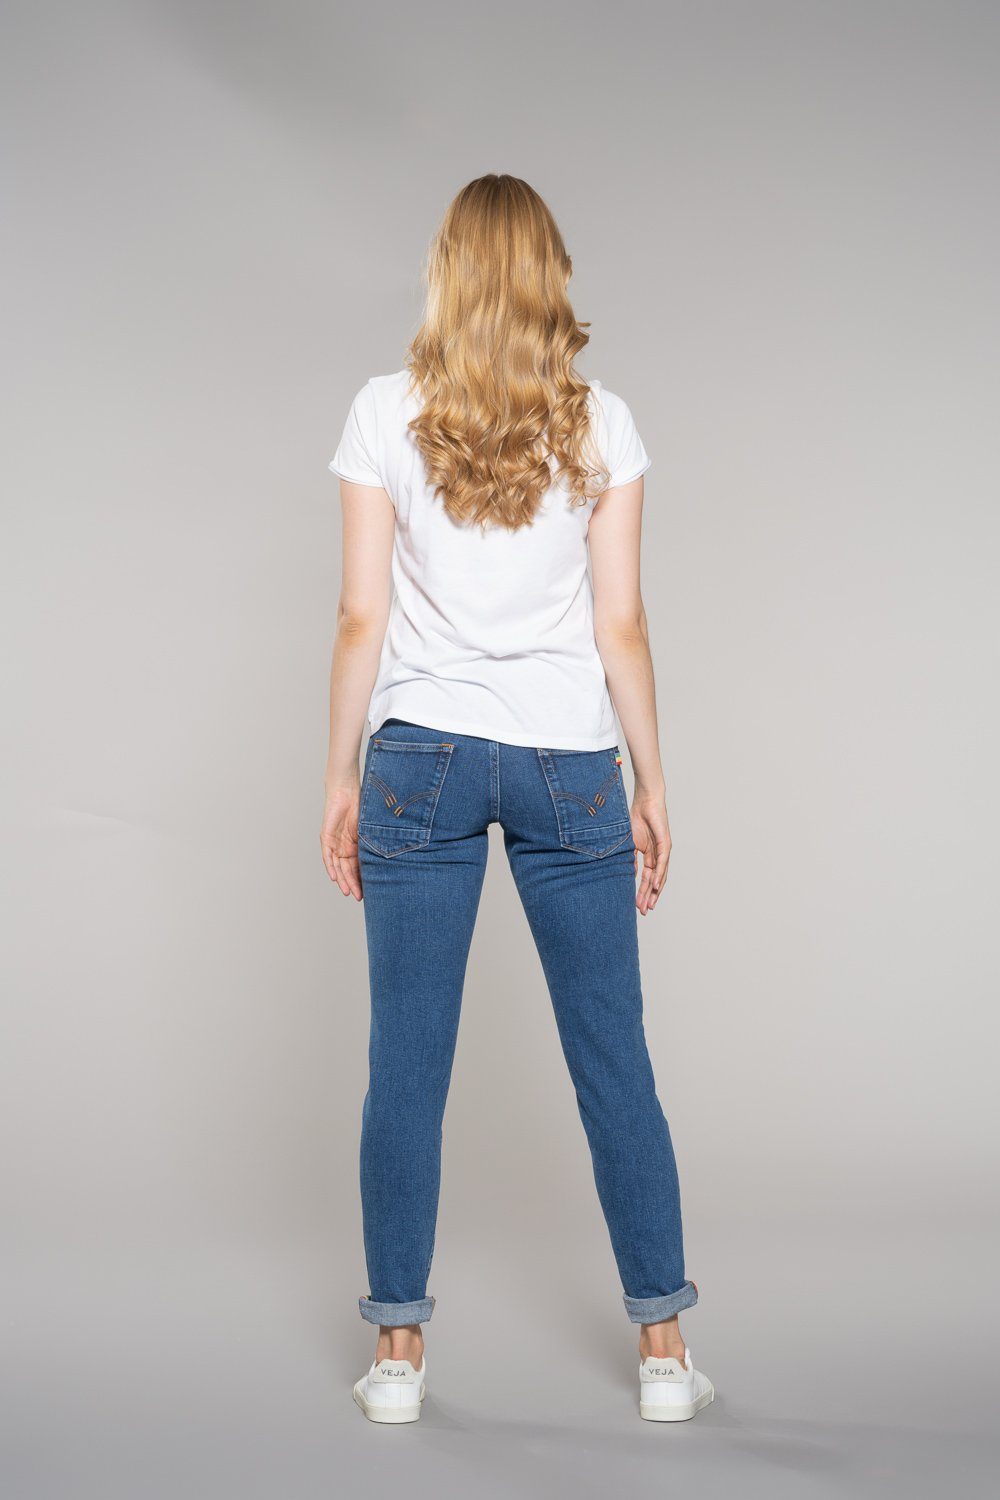 Feuervogl Slim-fit-Jeans fv-West:minster, Unisex, Fit, Medium Waist, Slim Waist Slim 5-Pocket-Style, Unisex Medium Fit, Blue Fashion